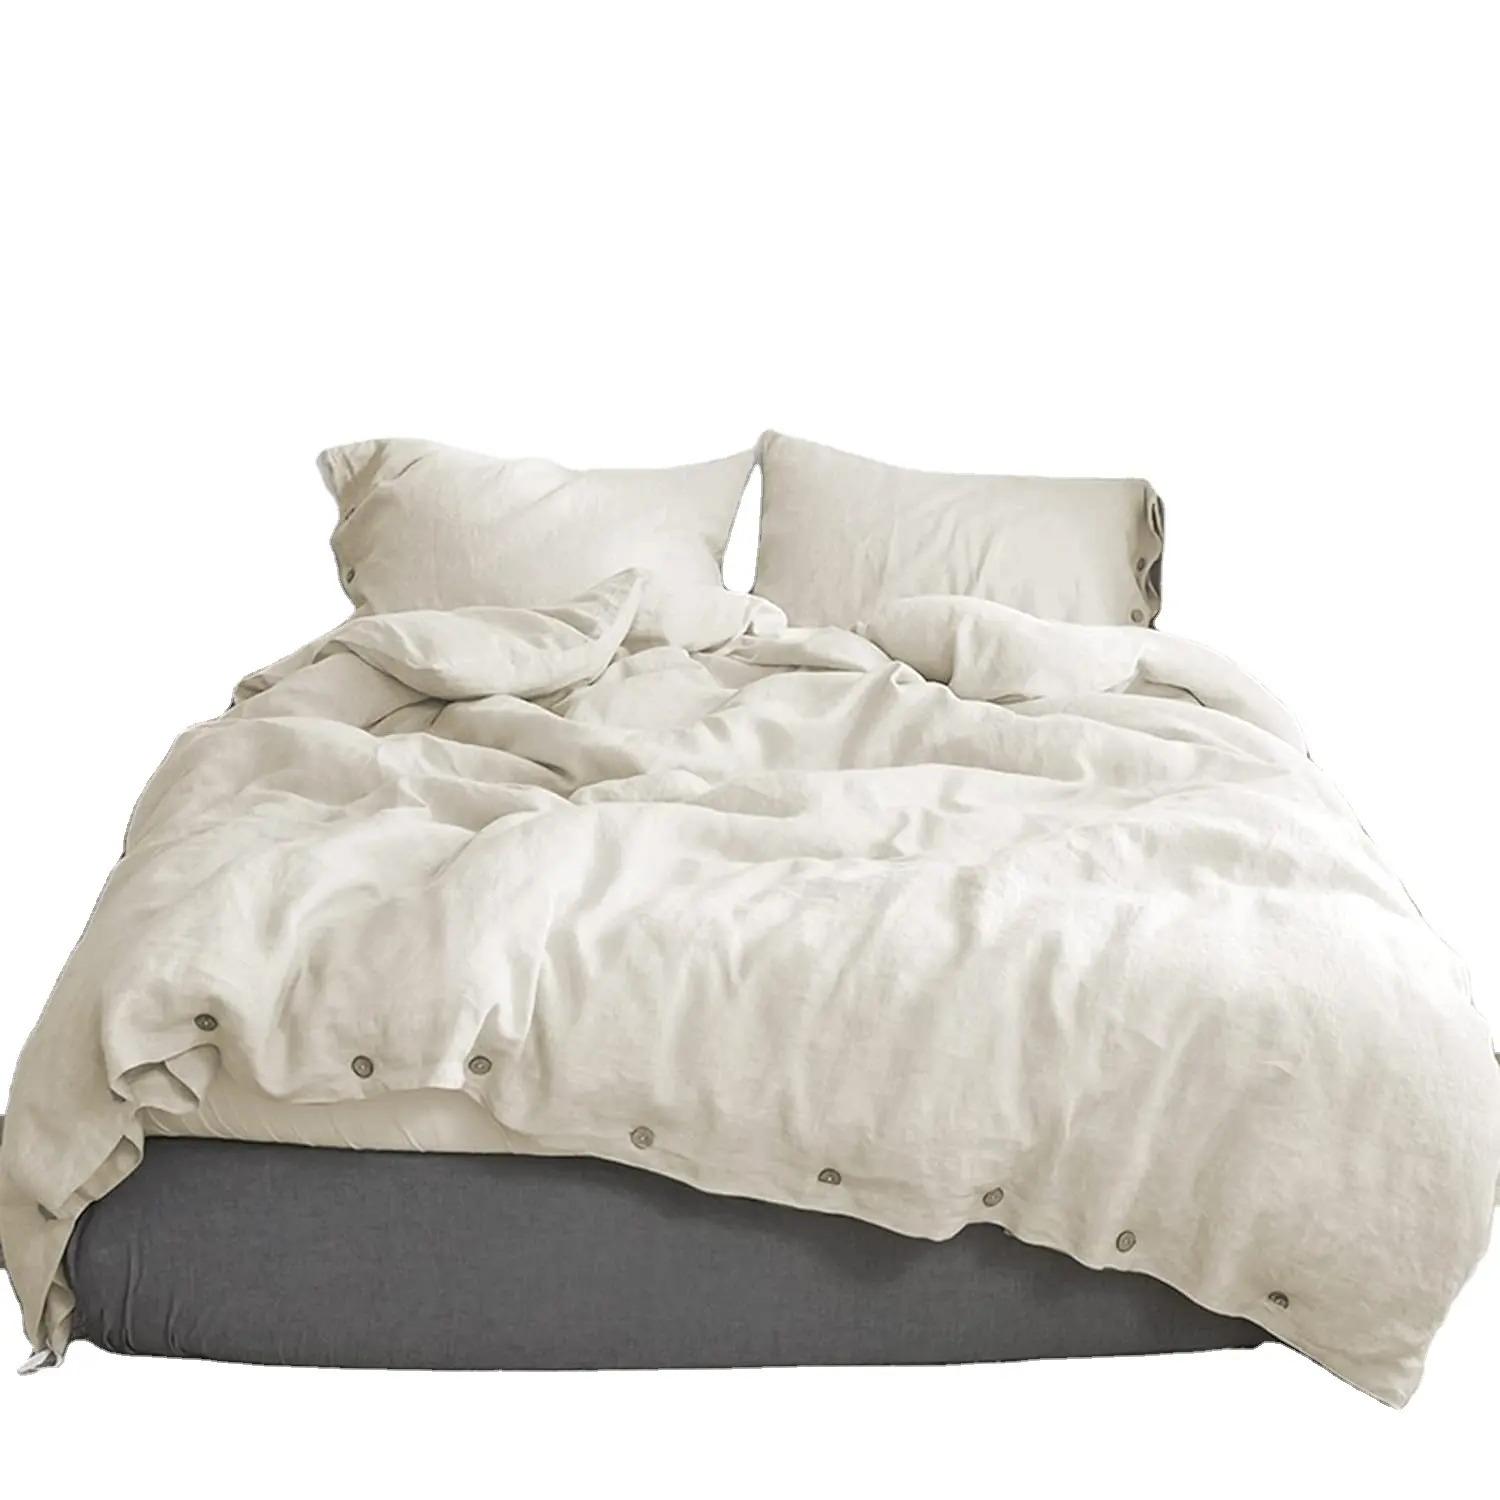 custom sheet sets bedding wholesale bed covers king size duvet bedding set good material ramie linen bedding